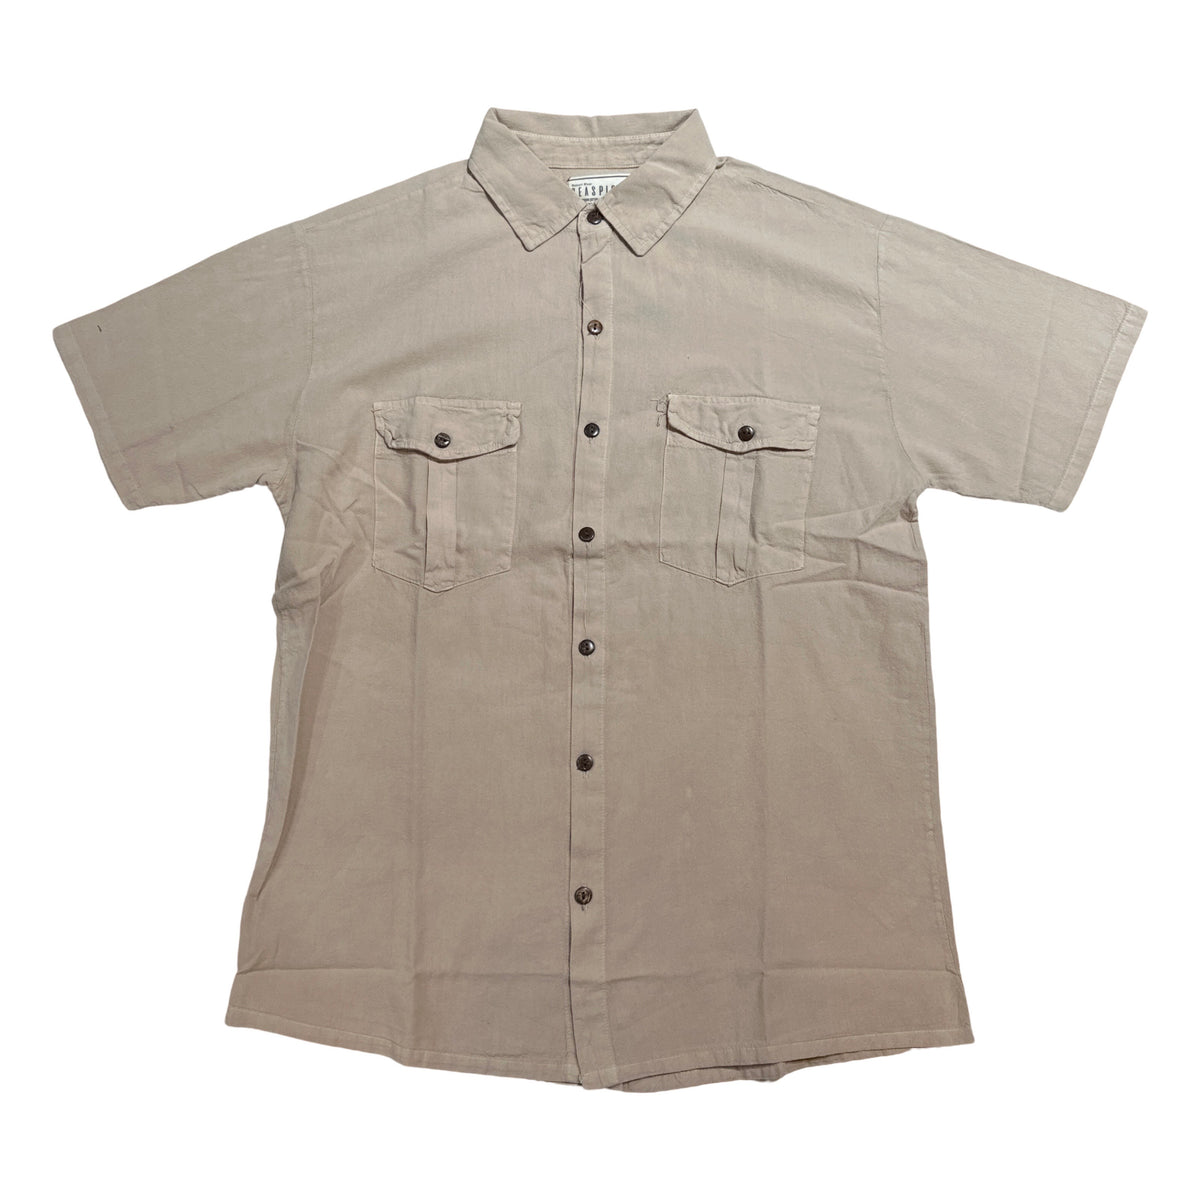 Seaspice White Double Pocket Peruvian Cotton Short Sleeve Shirt